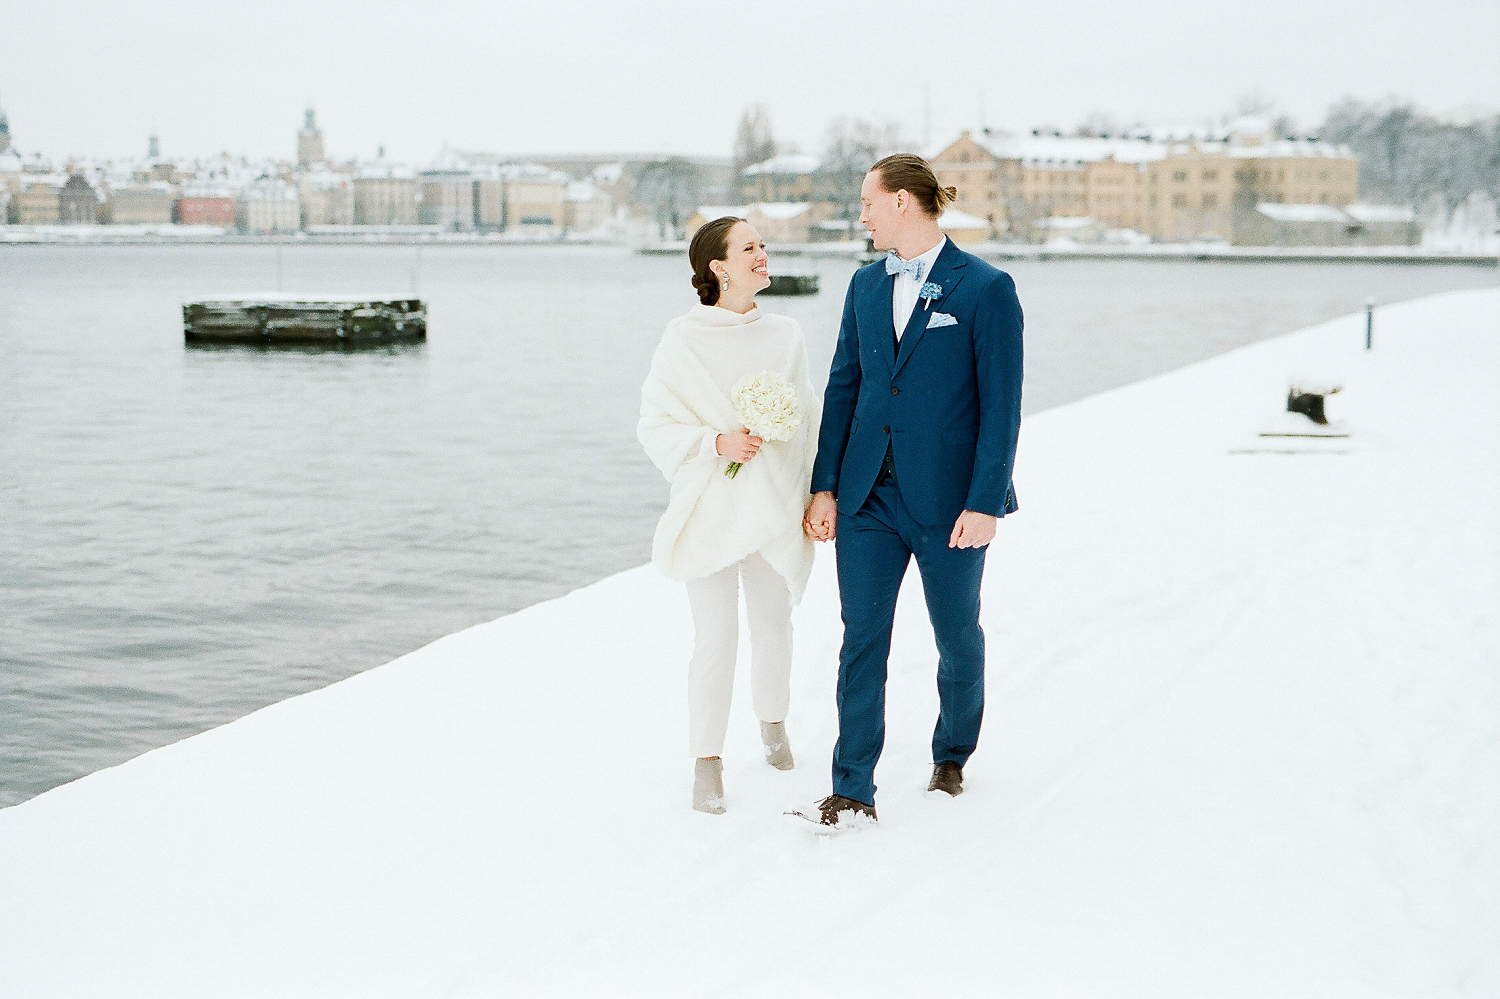 Winter wedding in Sweden